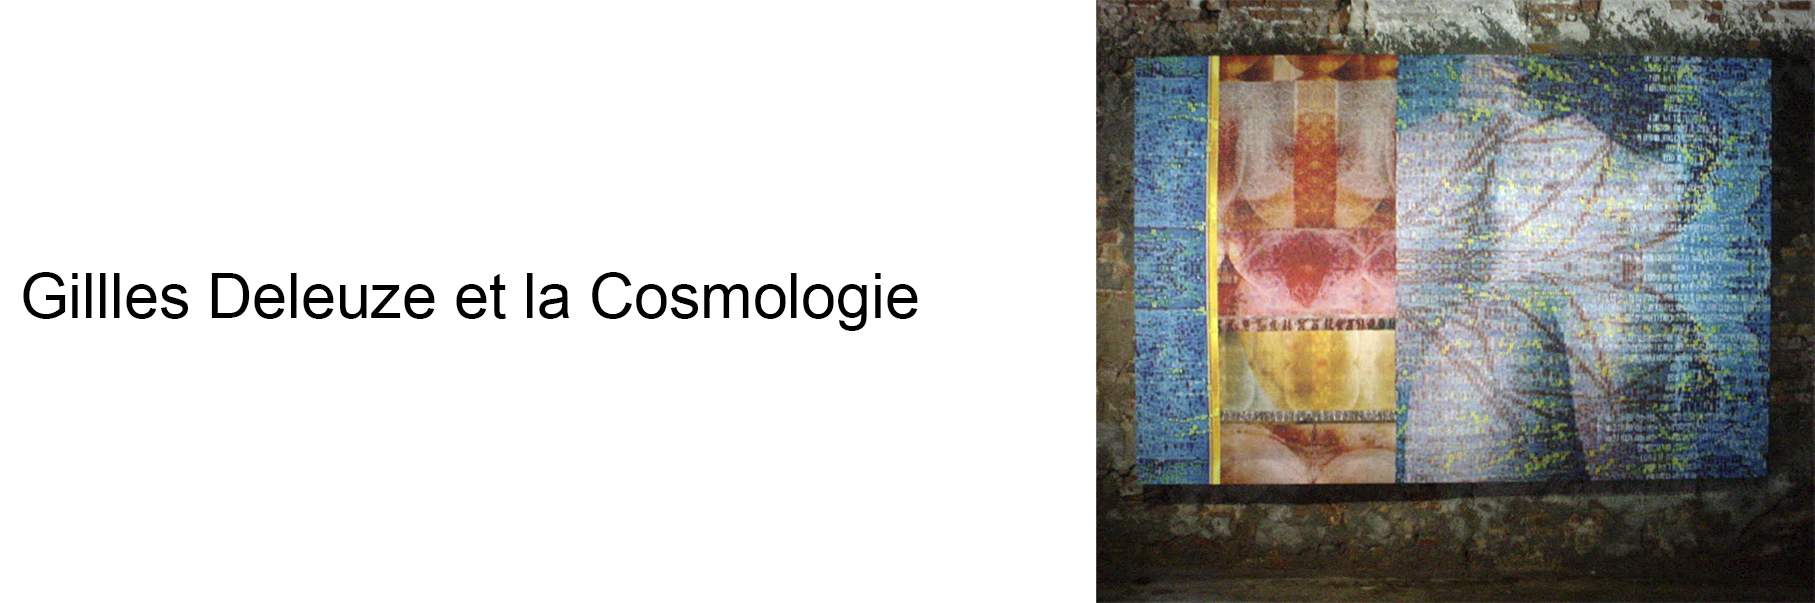 Gilles Deleuze and Cosmology – Joseph NECHVATAL